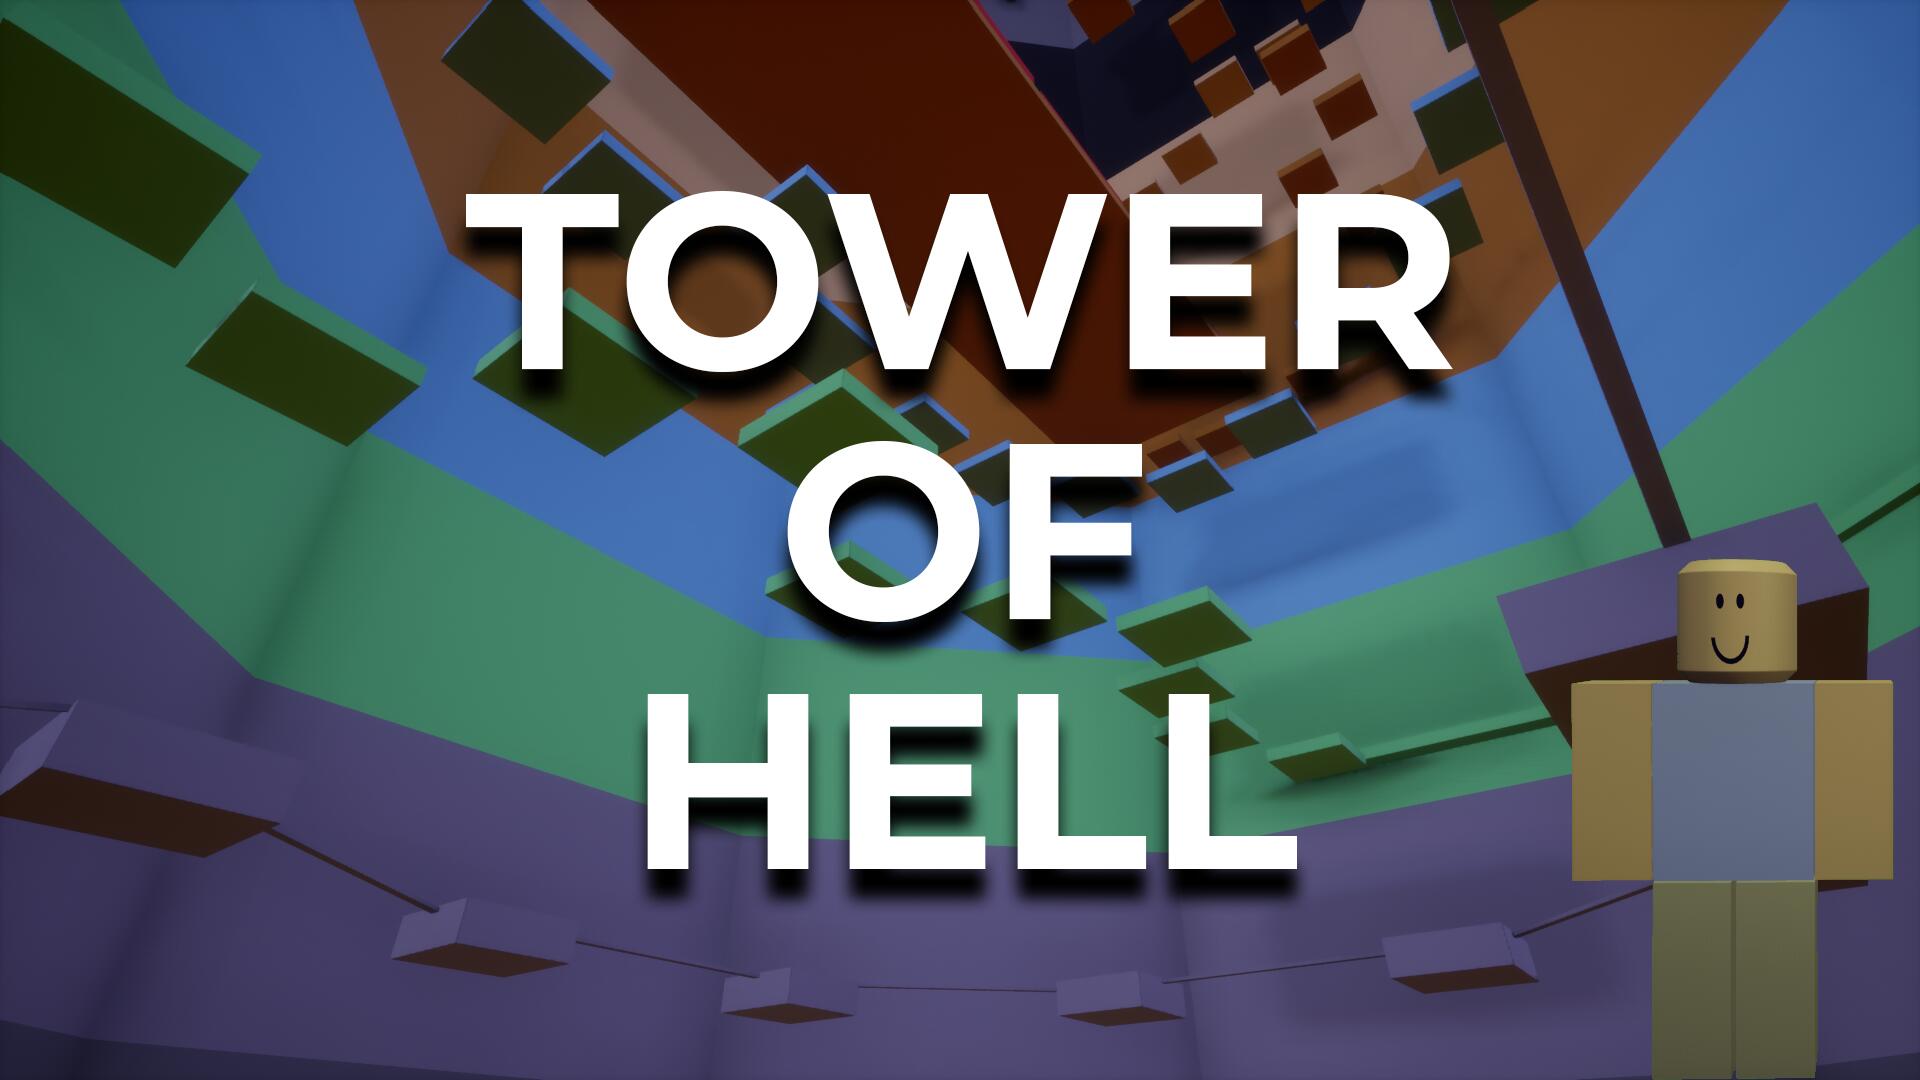 Tower of Hell - game Roblox paling seru 2022